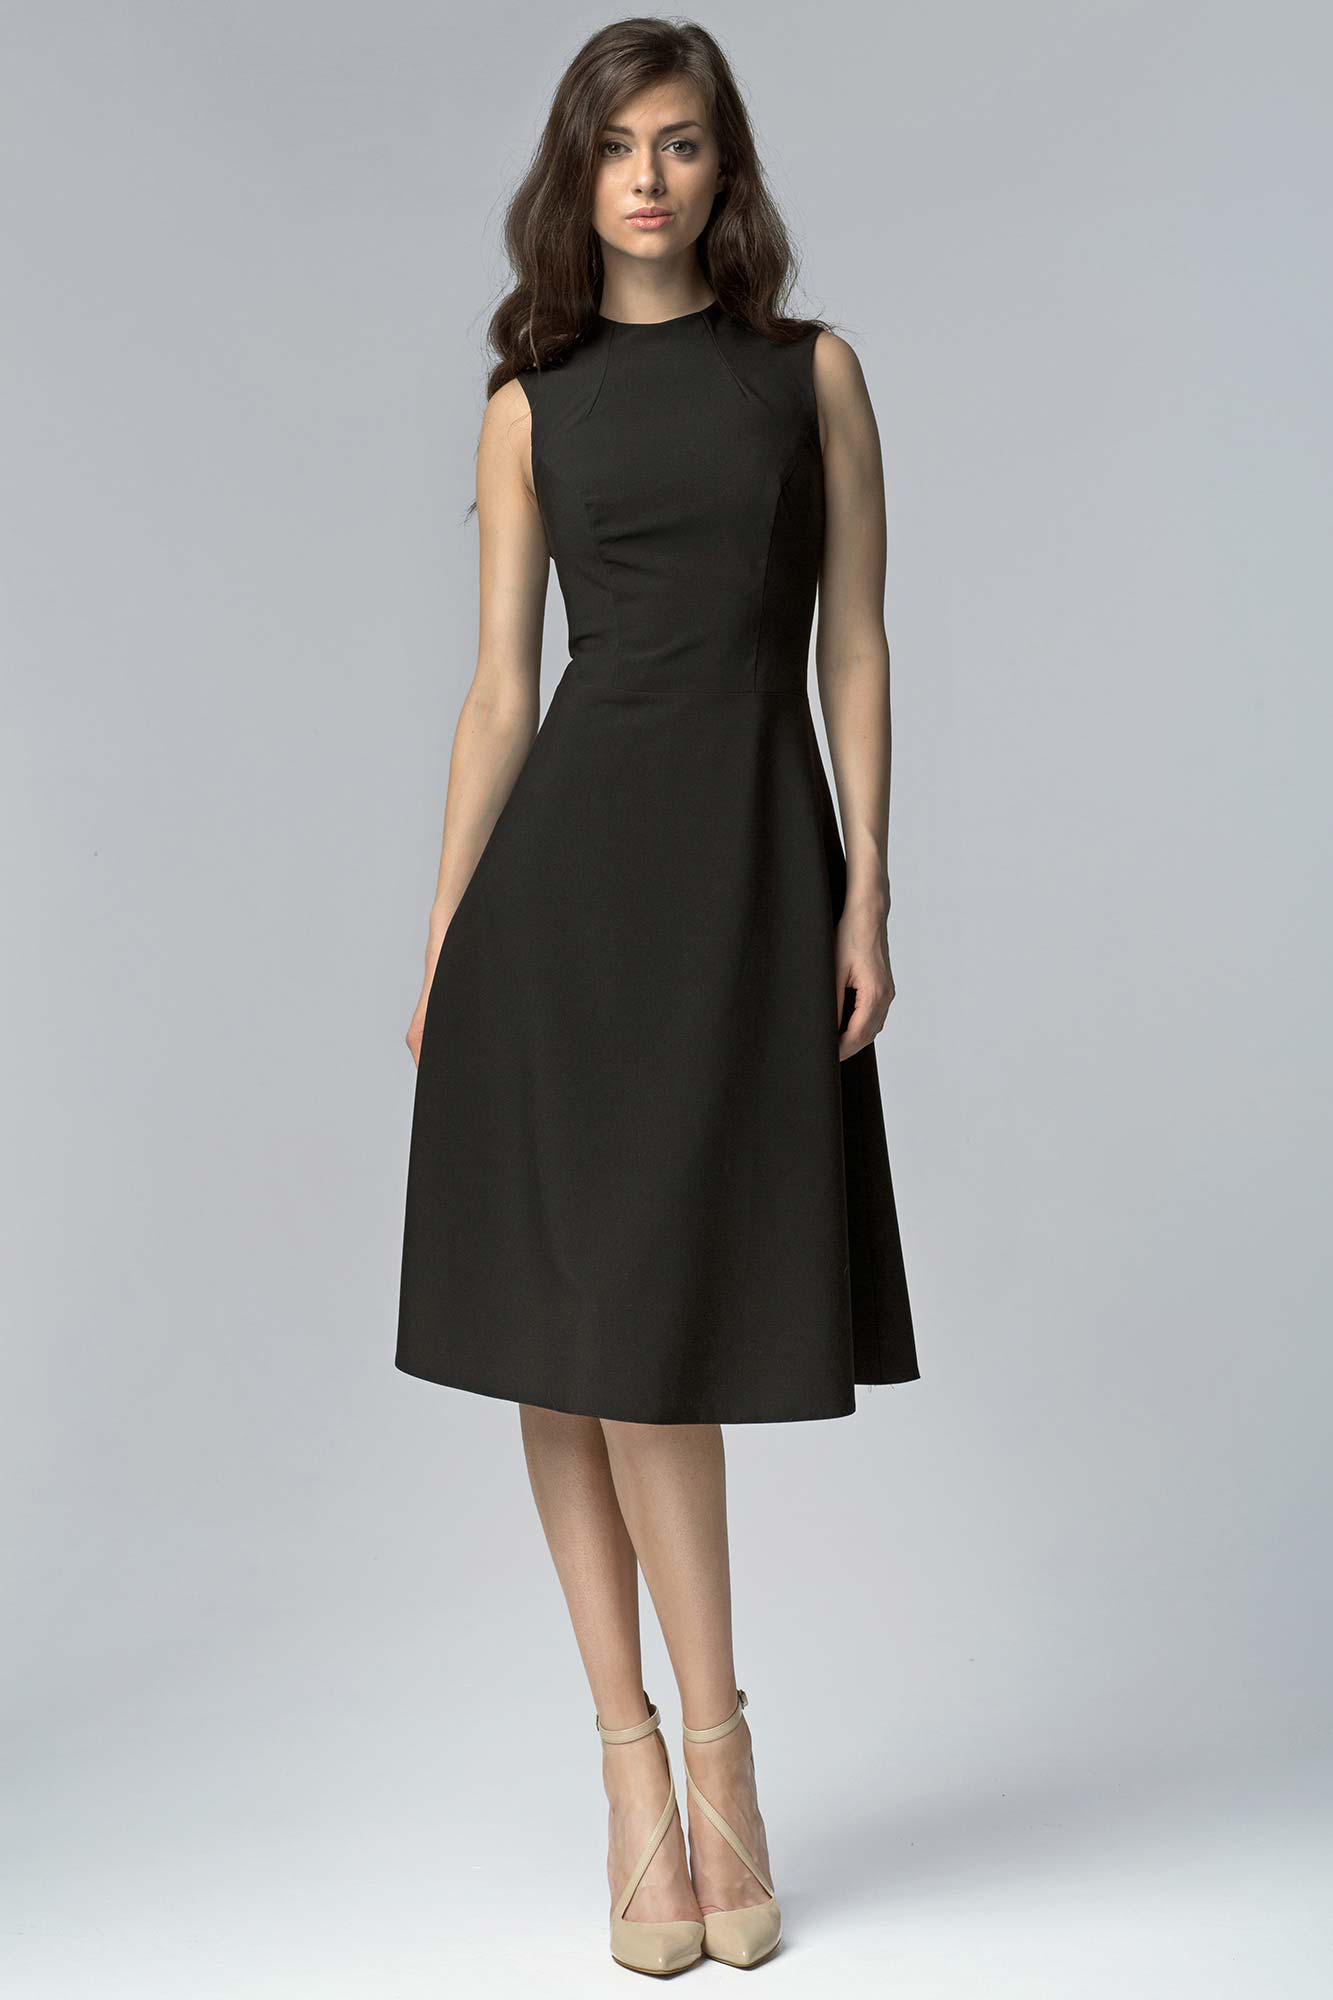 Black dress, knee length, sleeveless: Absolute chic!